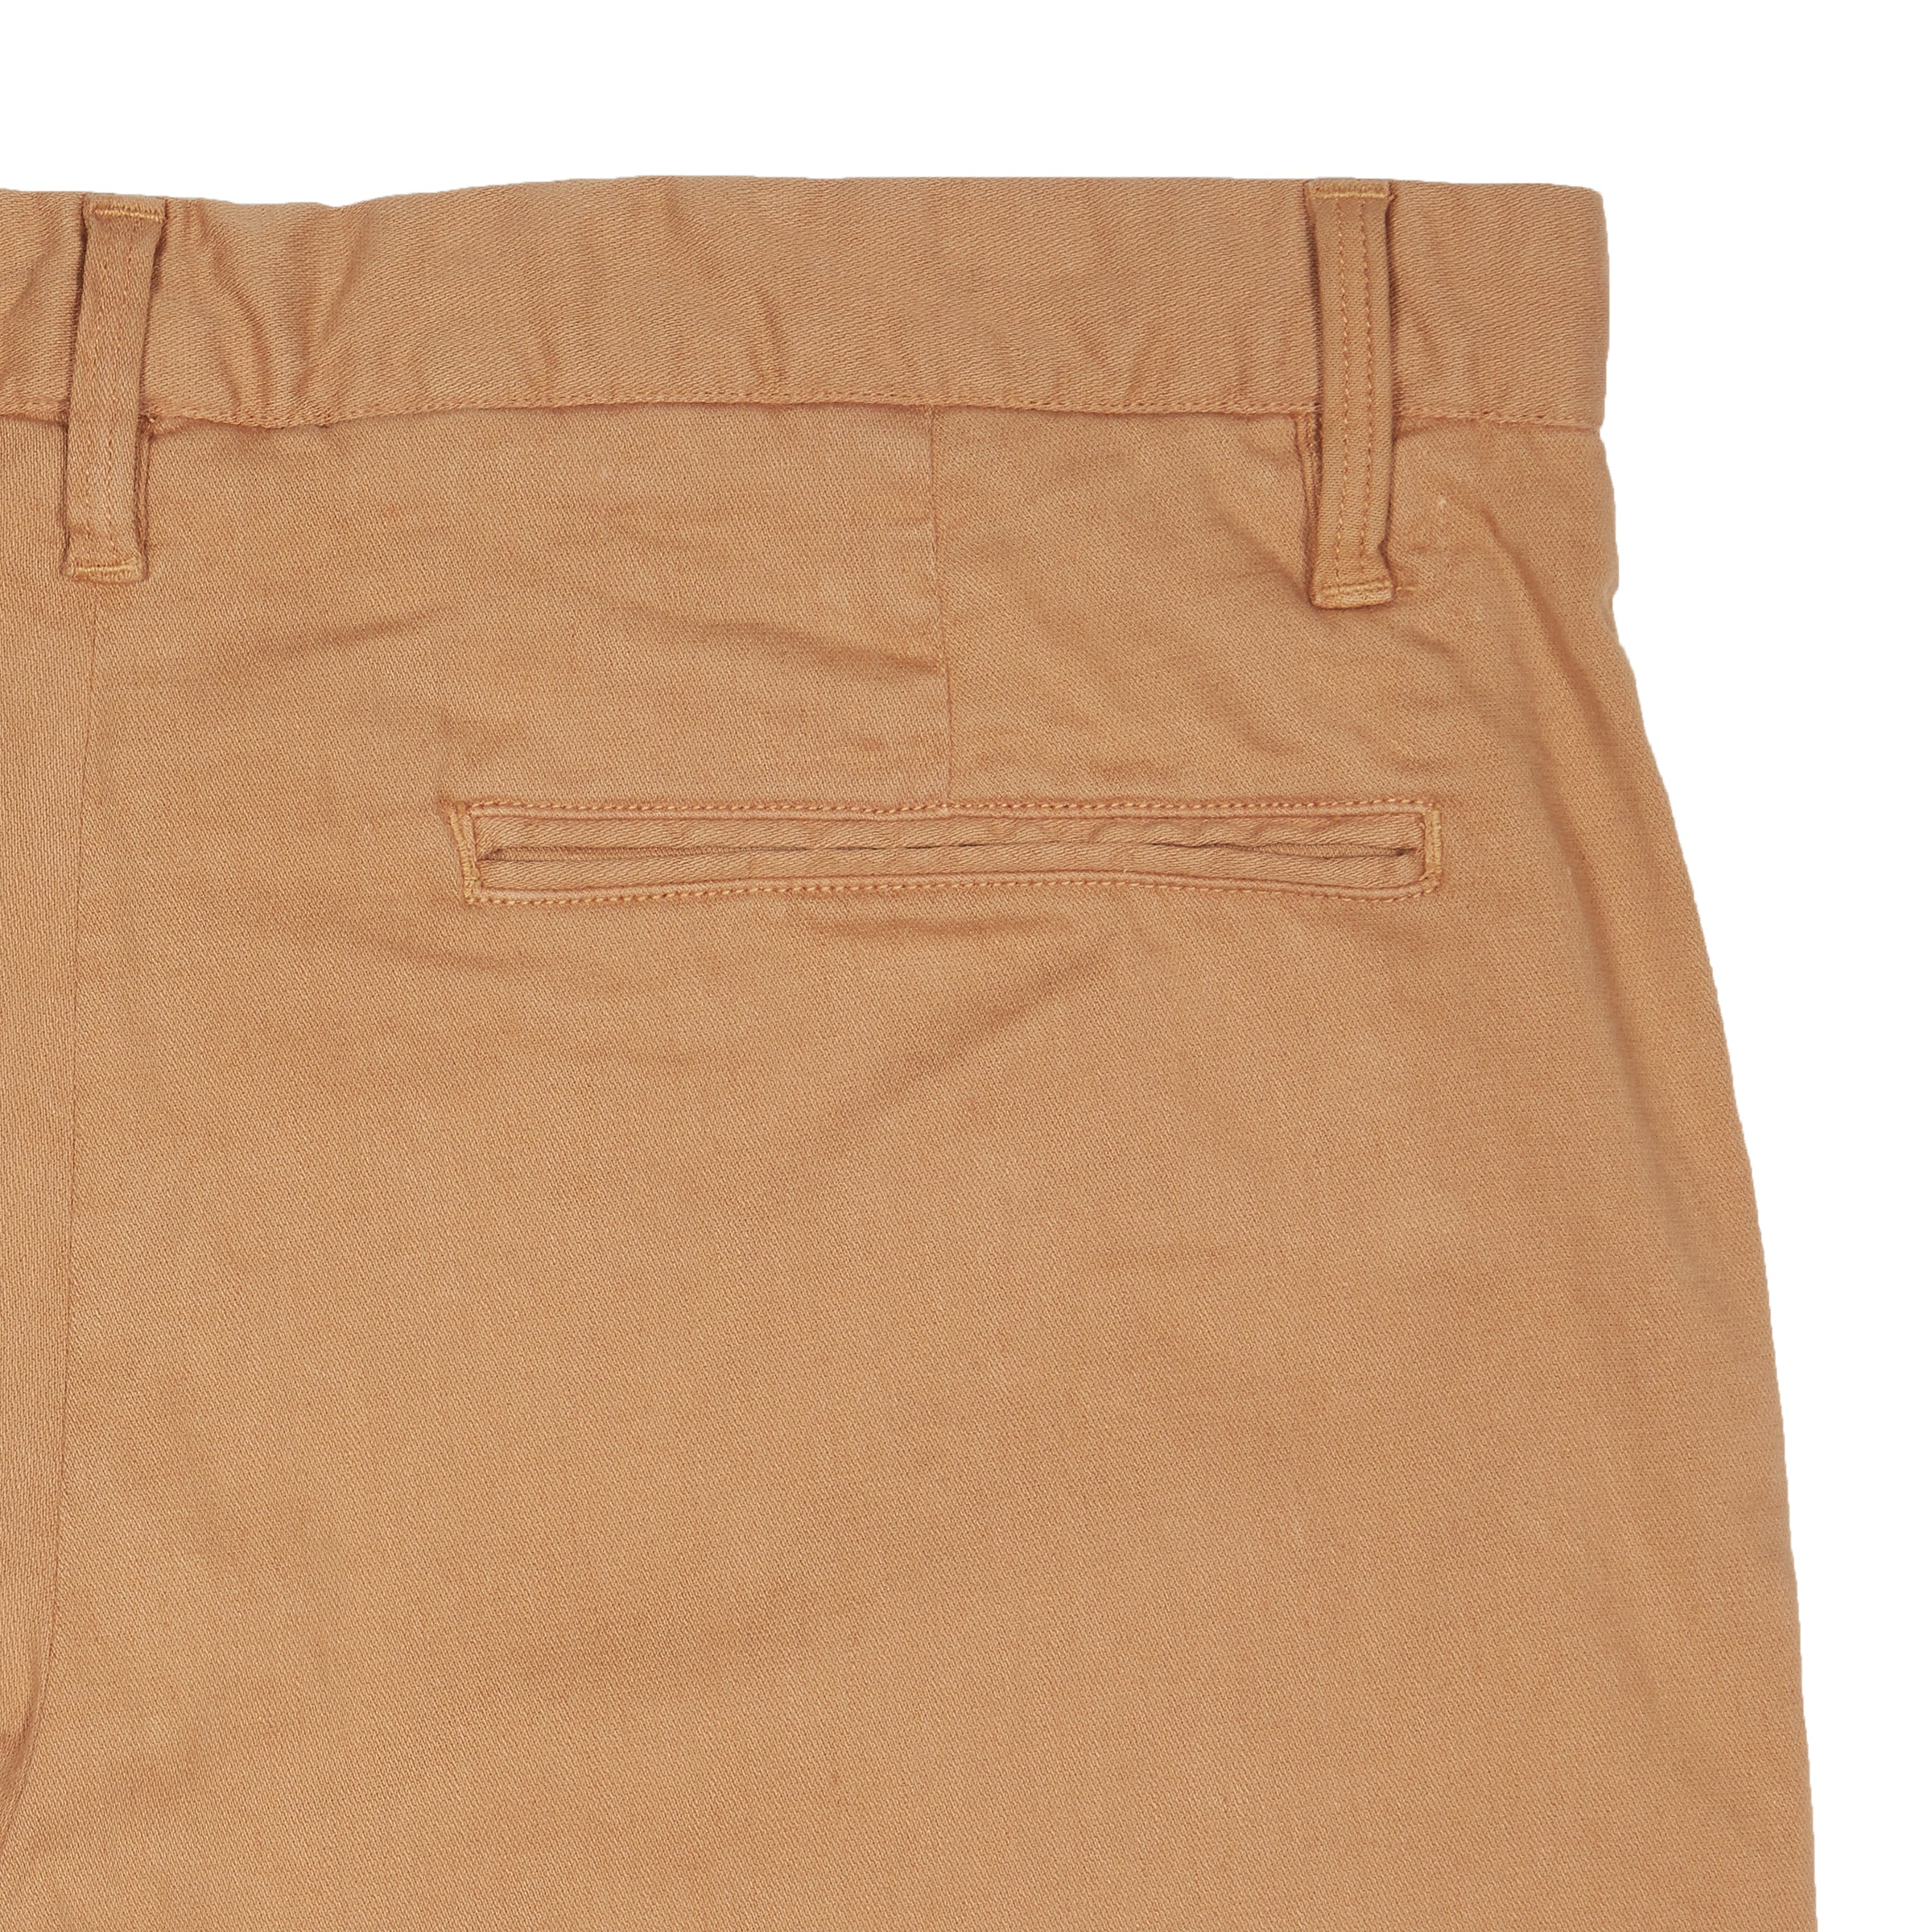 Bermuda Cotton Linen Stretch Slim Fit Pants - Indian Tan